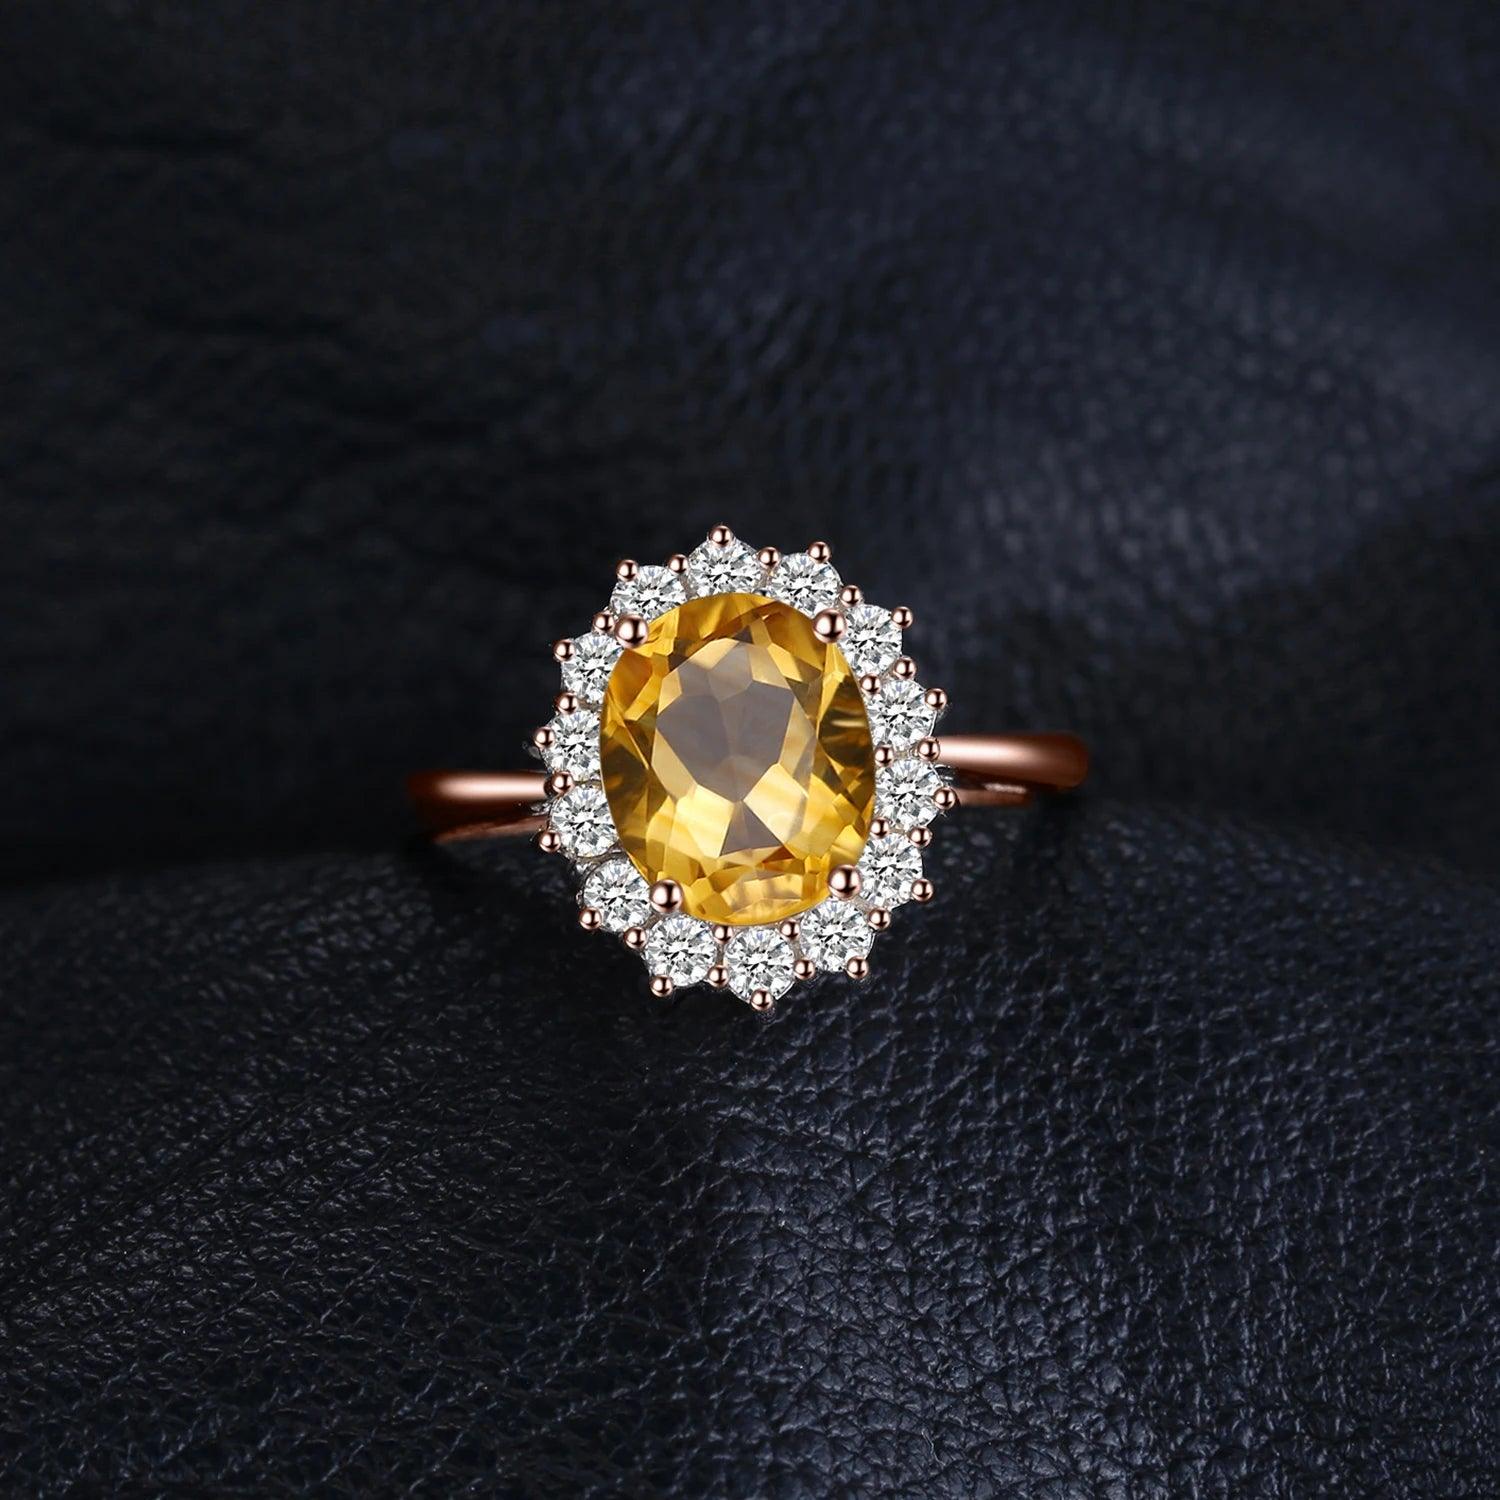 JPBRCJ247 Finger Ring Charm Jewelry - Garnet 925 Sterling Silver - Touchy Style